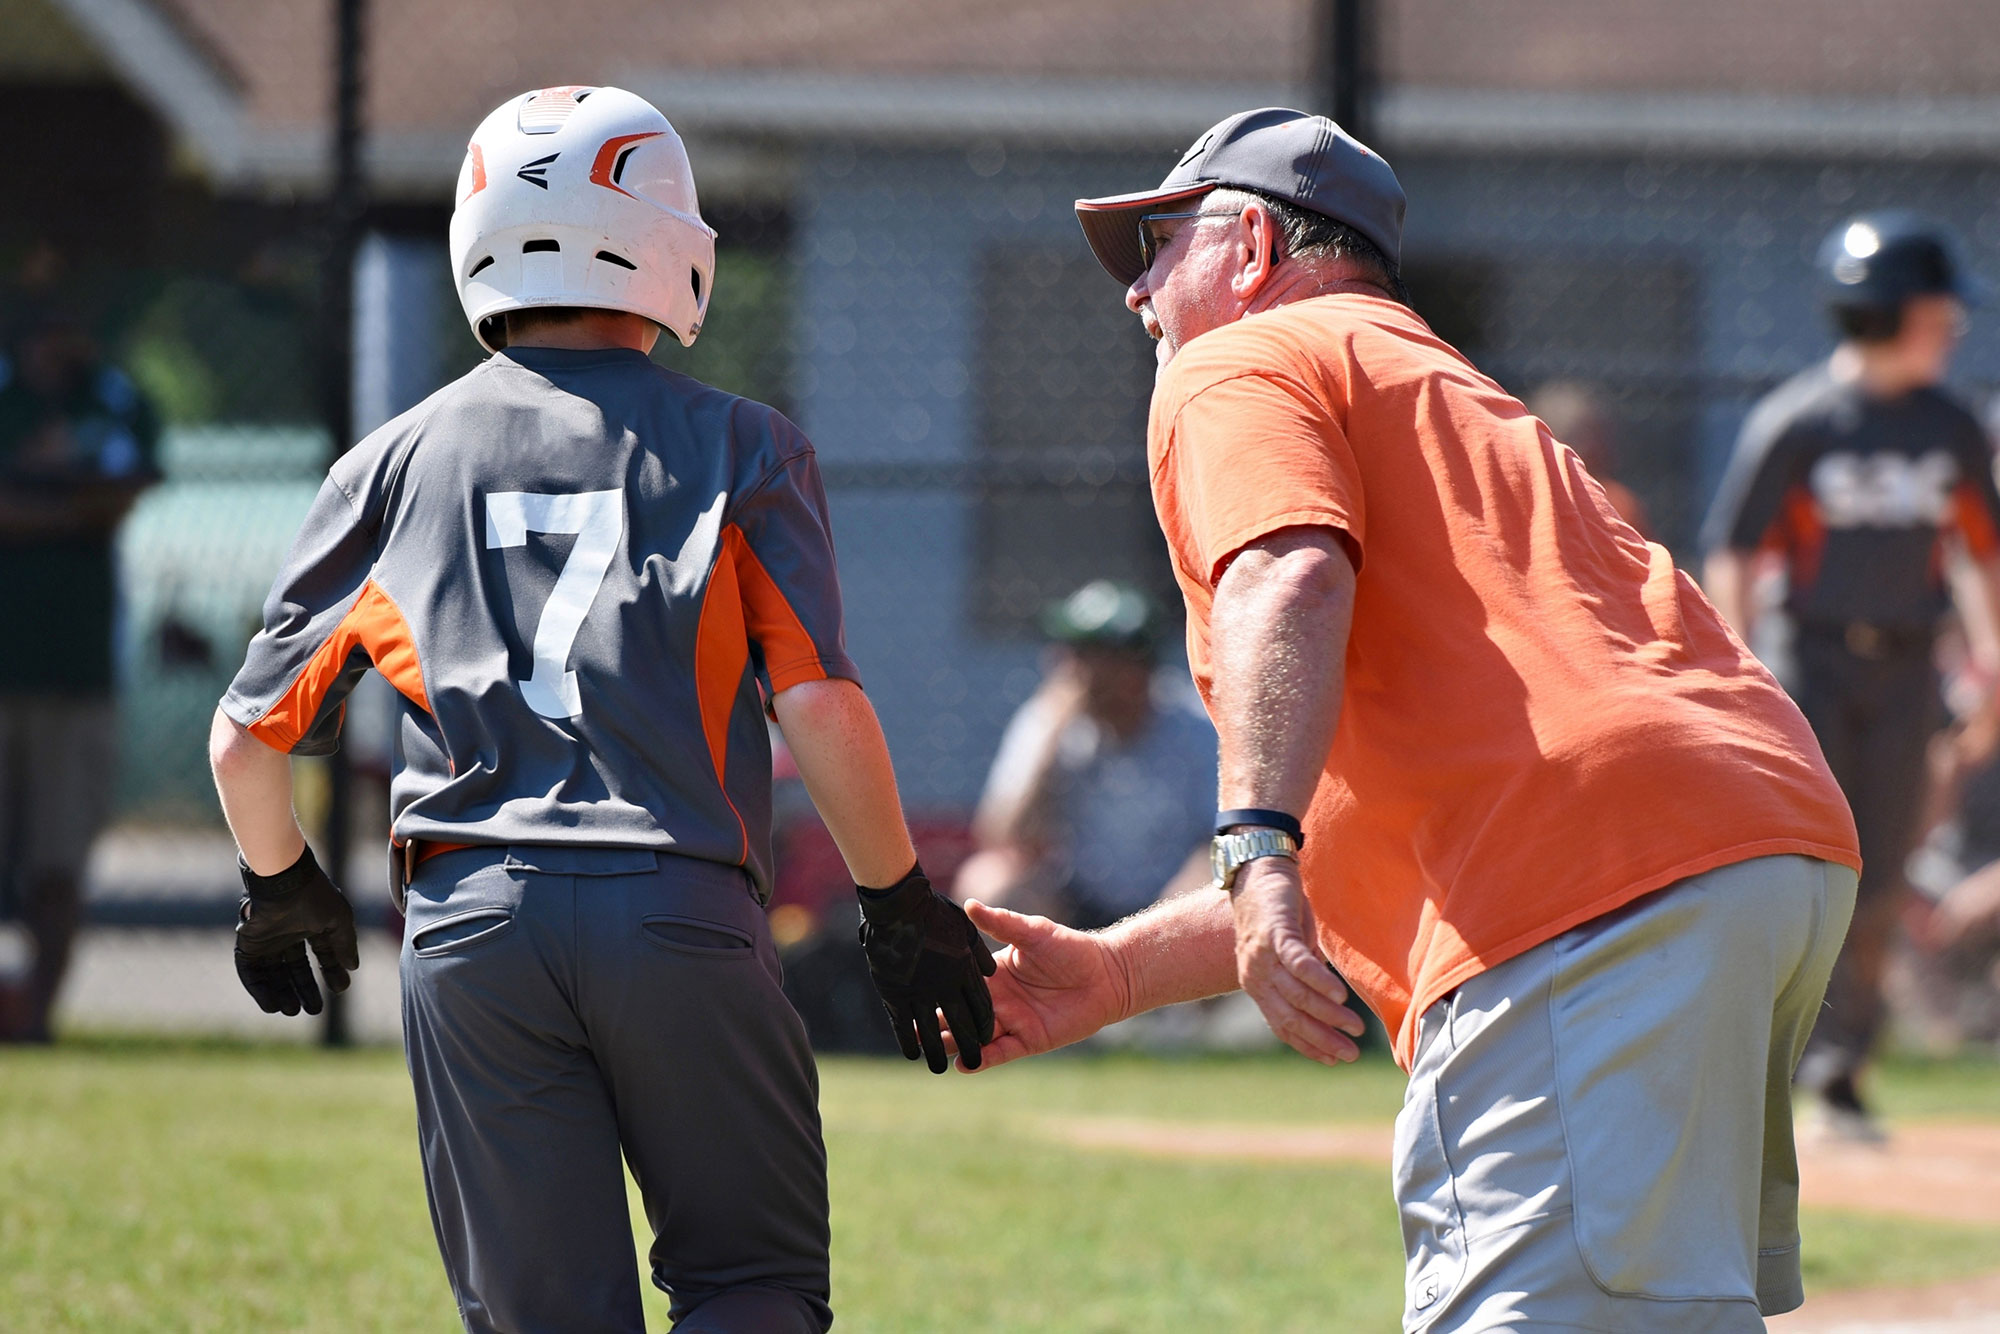 8 Helpful Tips for New Little League® Coaches - Little League